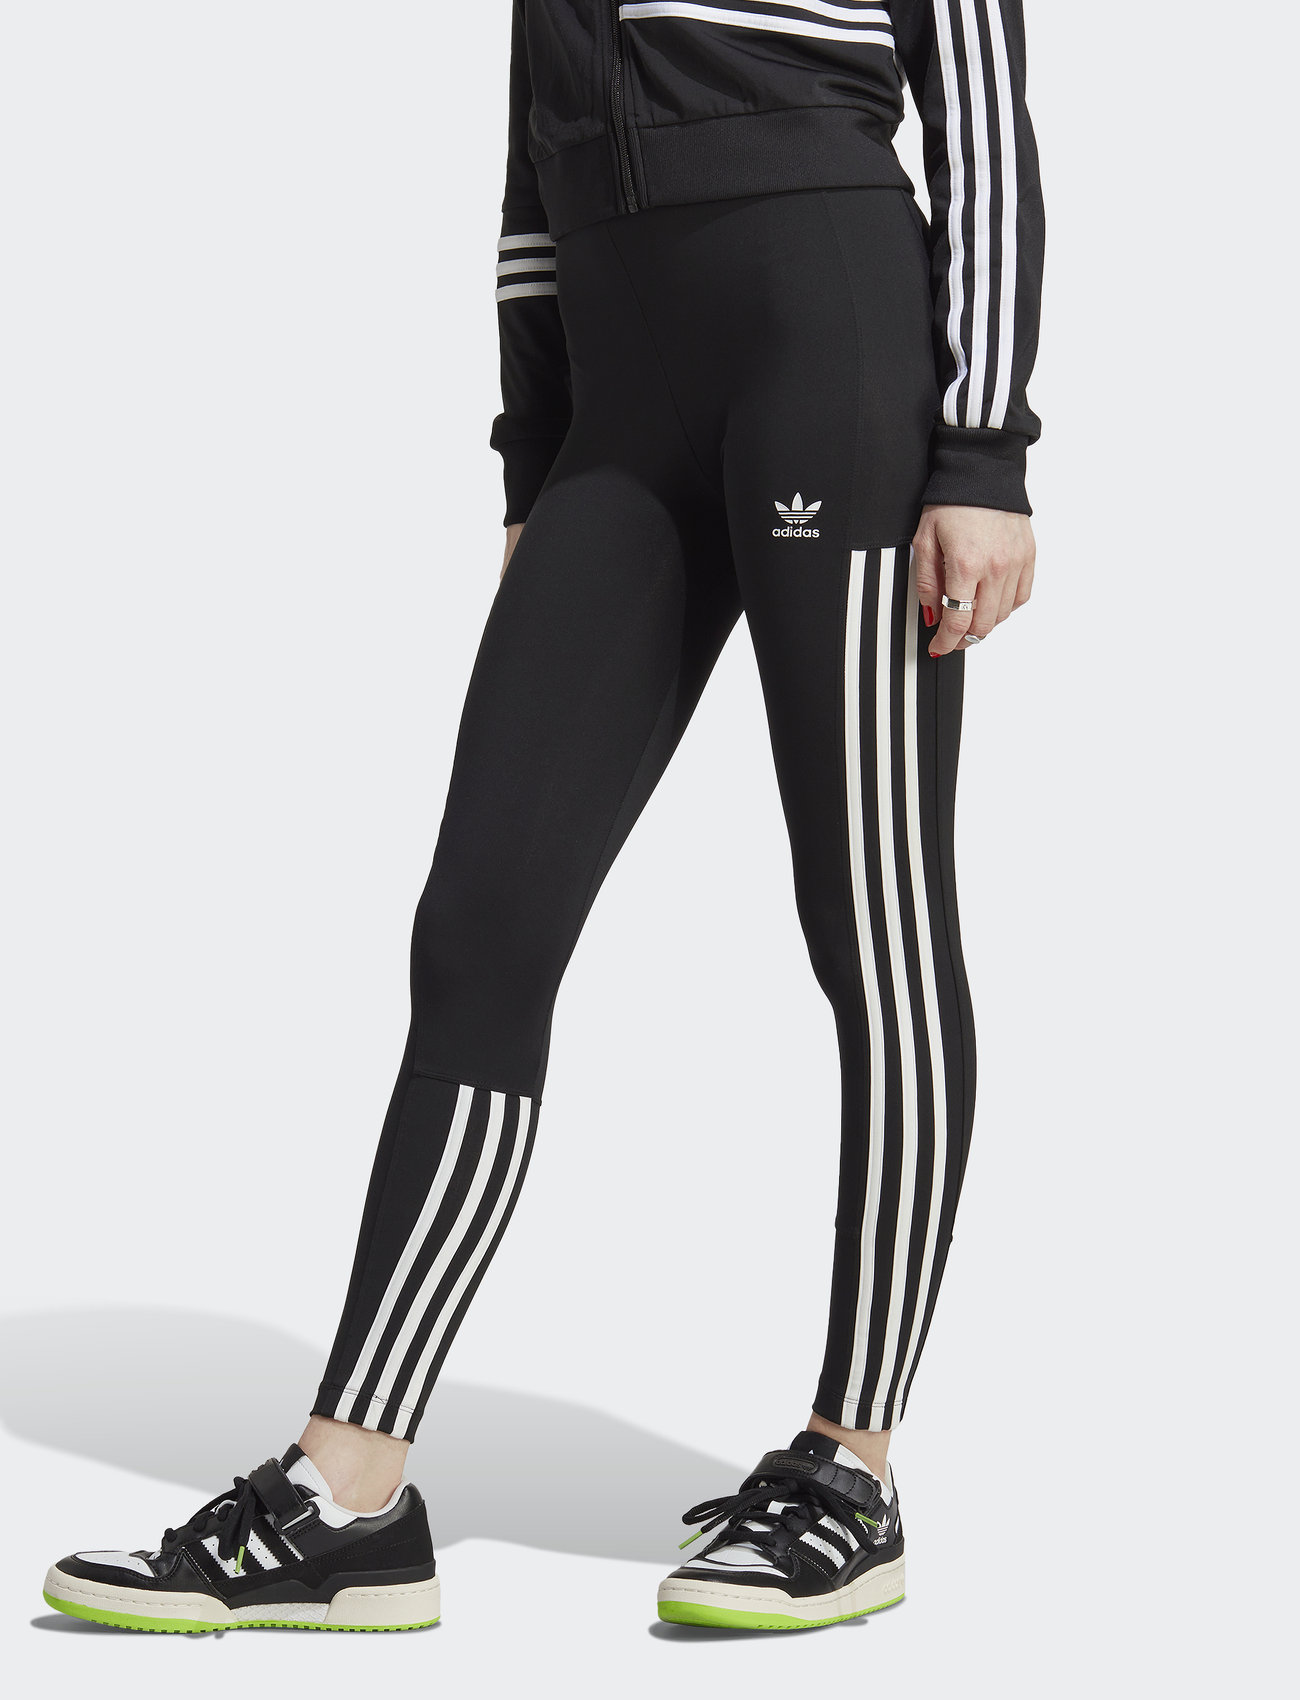 Adidas Climalite Women's 3 Stripe Tights Mid Rise | Adidas women, Adidas  three stripes, Striped tights